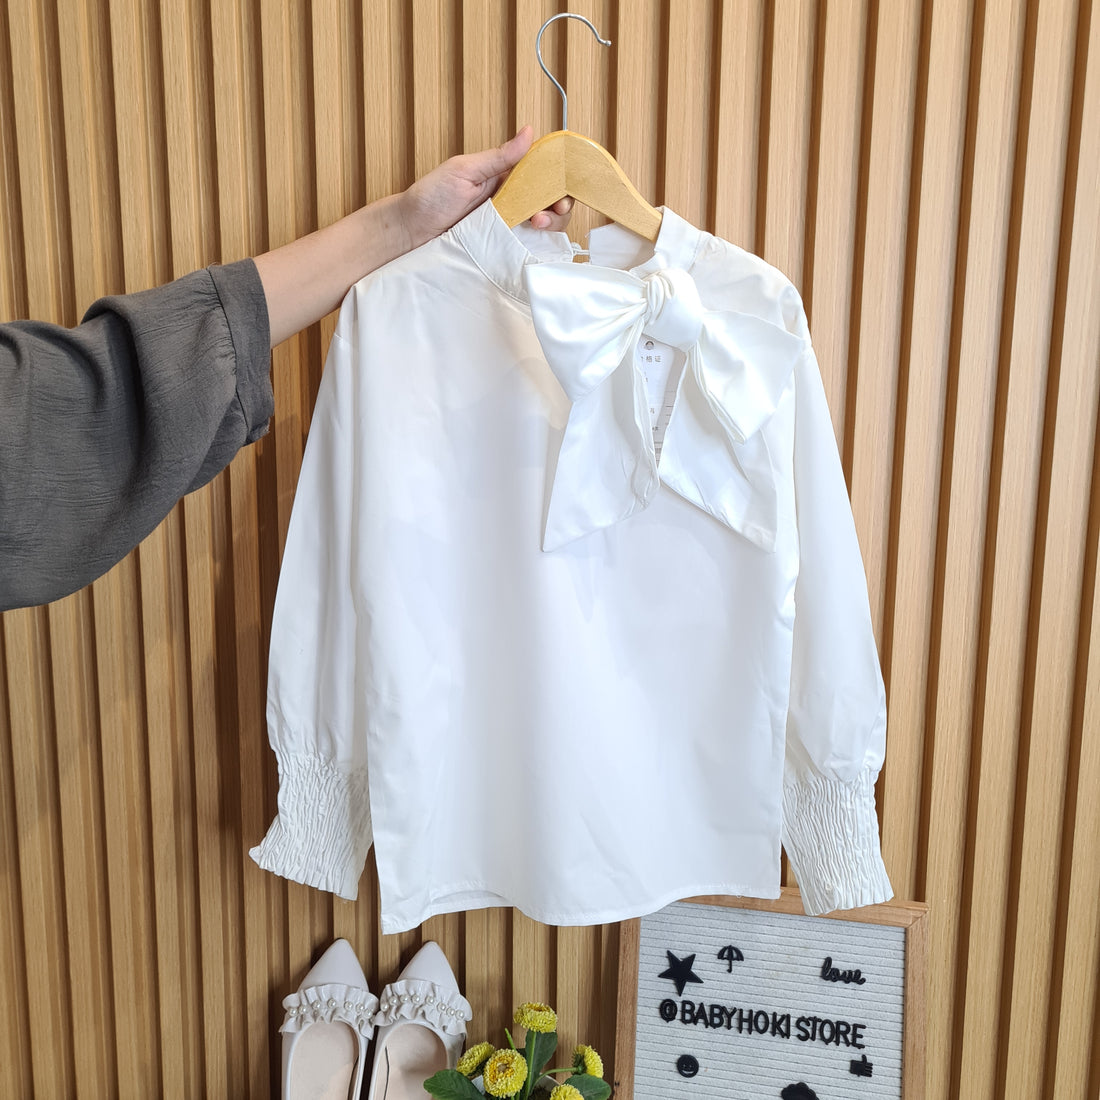 [507747] - Baju Atasan Blouse Polos Fashion Import Anak Perempuan - Motif Rubber Sleeve